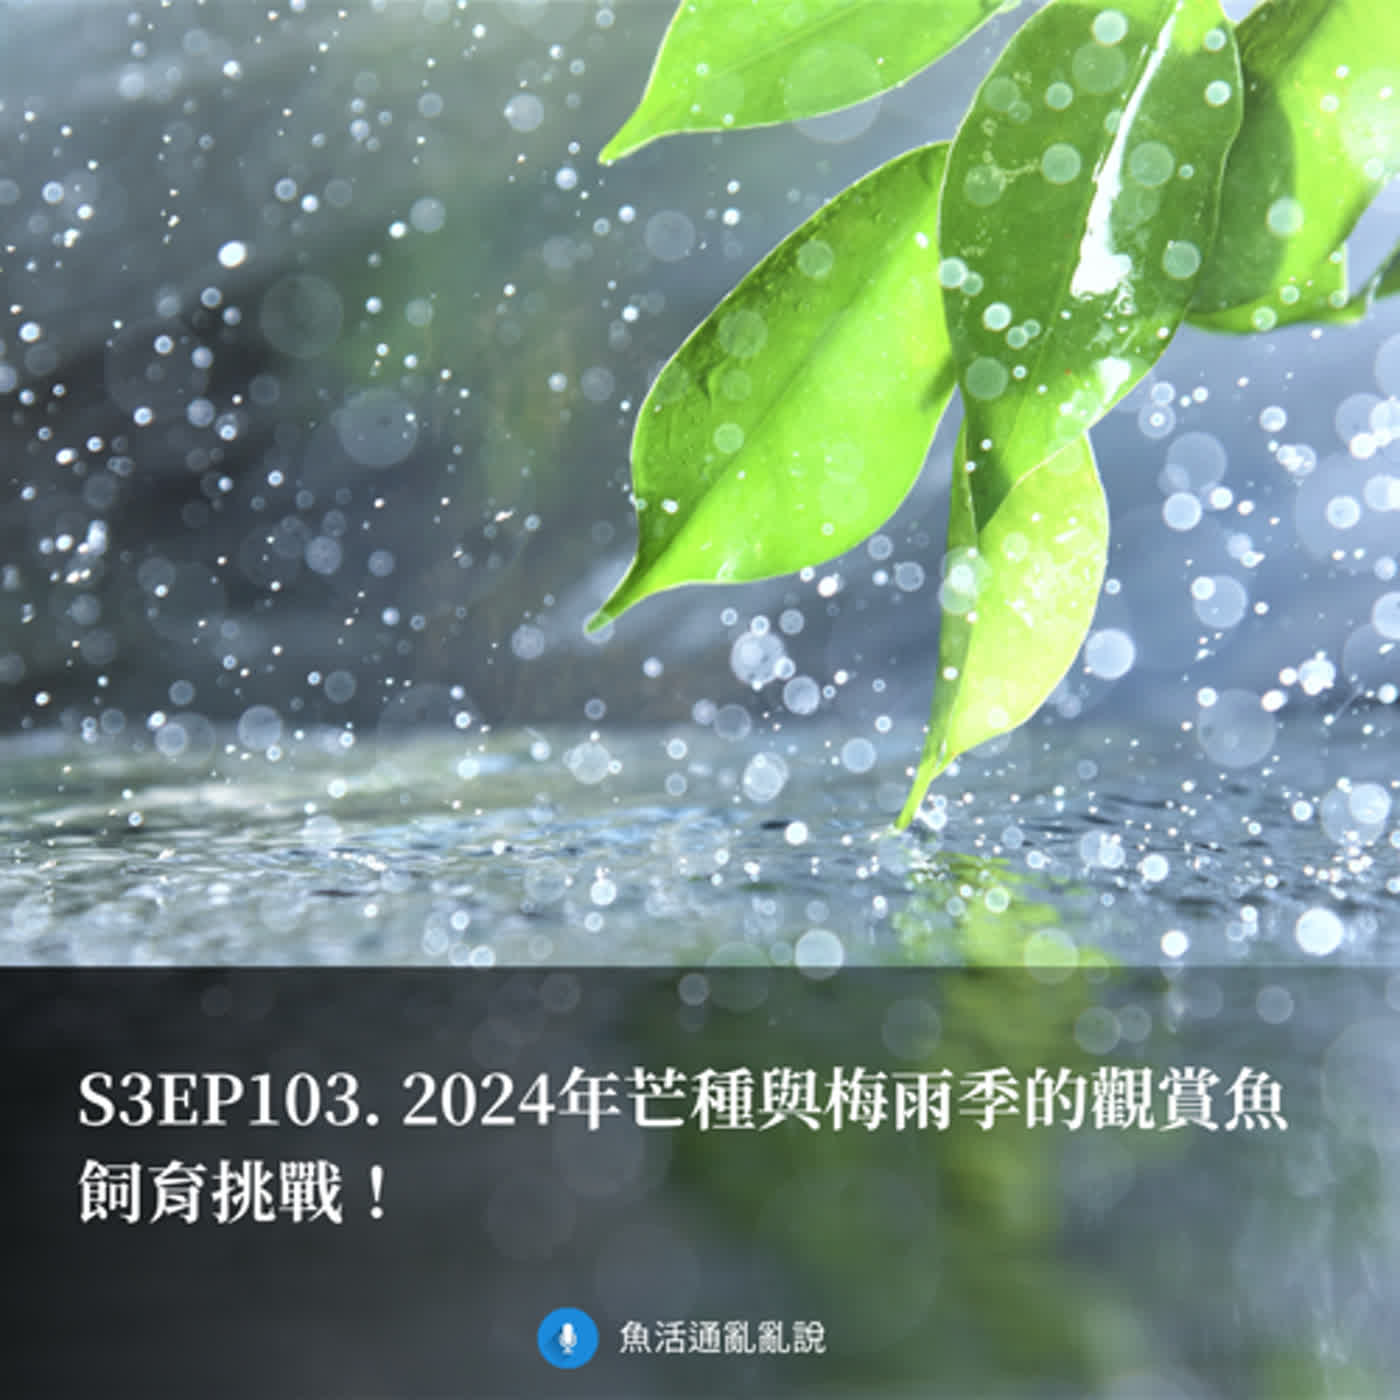 S3EP103. 2024年芒種與梅雨季的觀賞魚飼育挑戰！